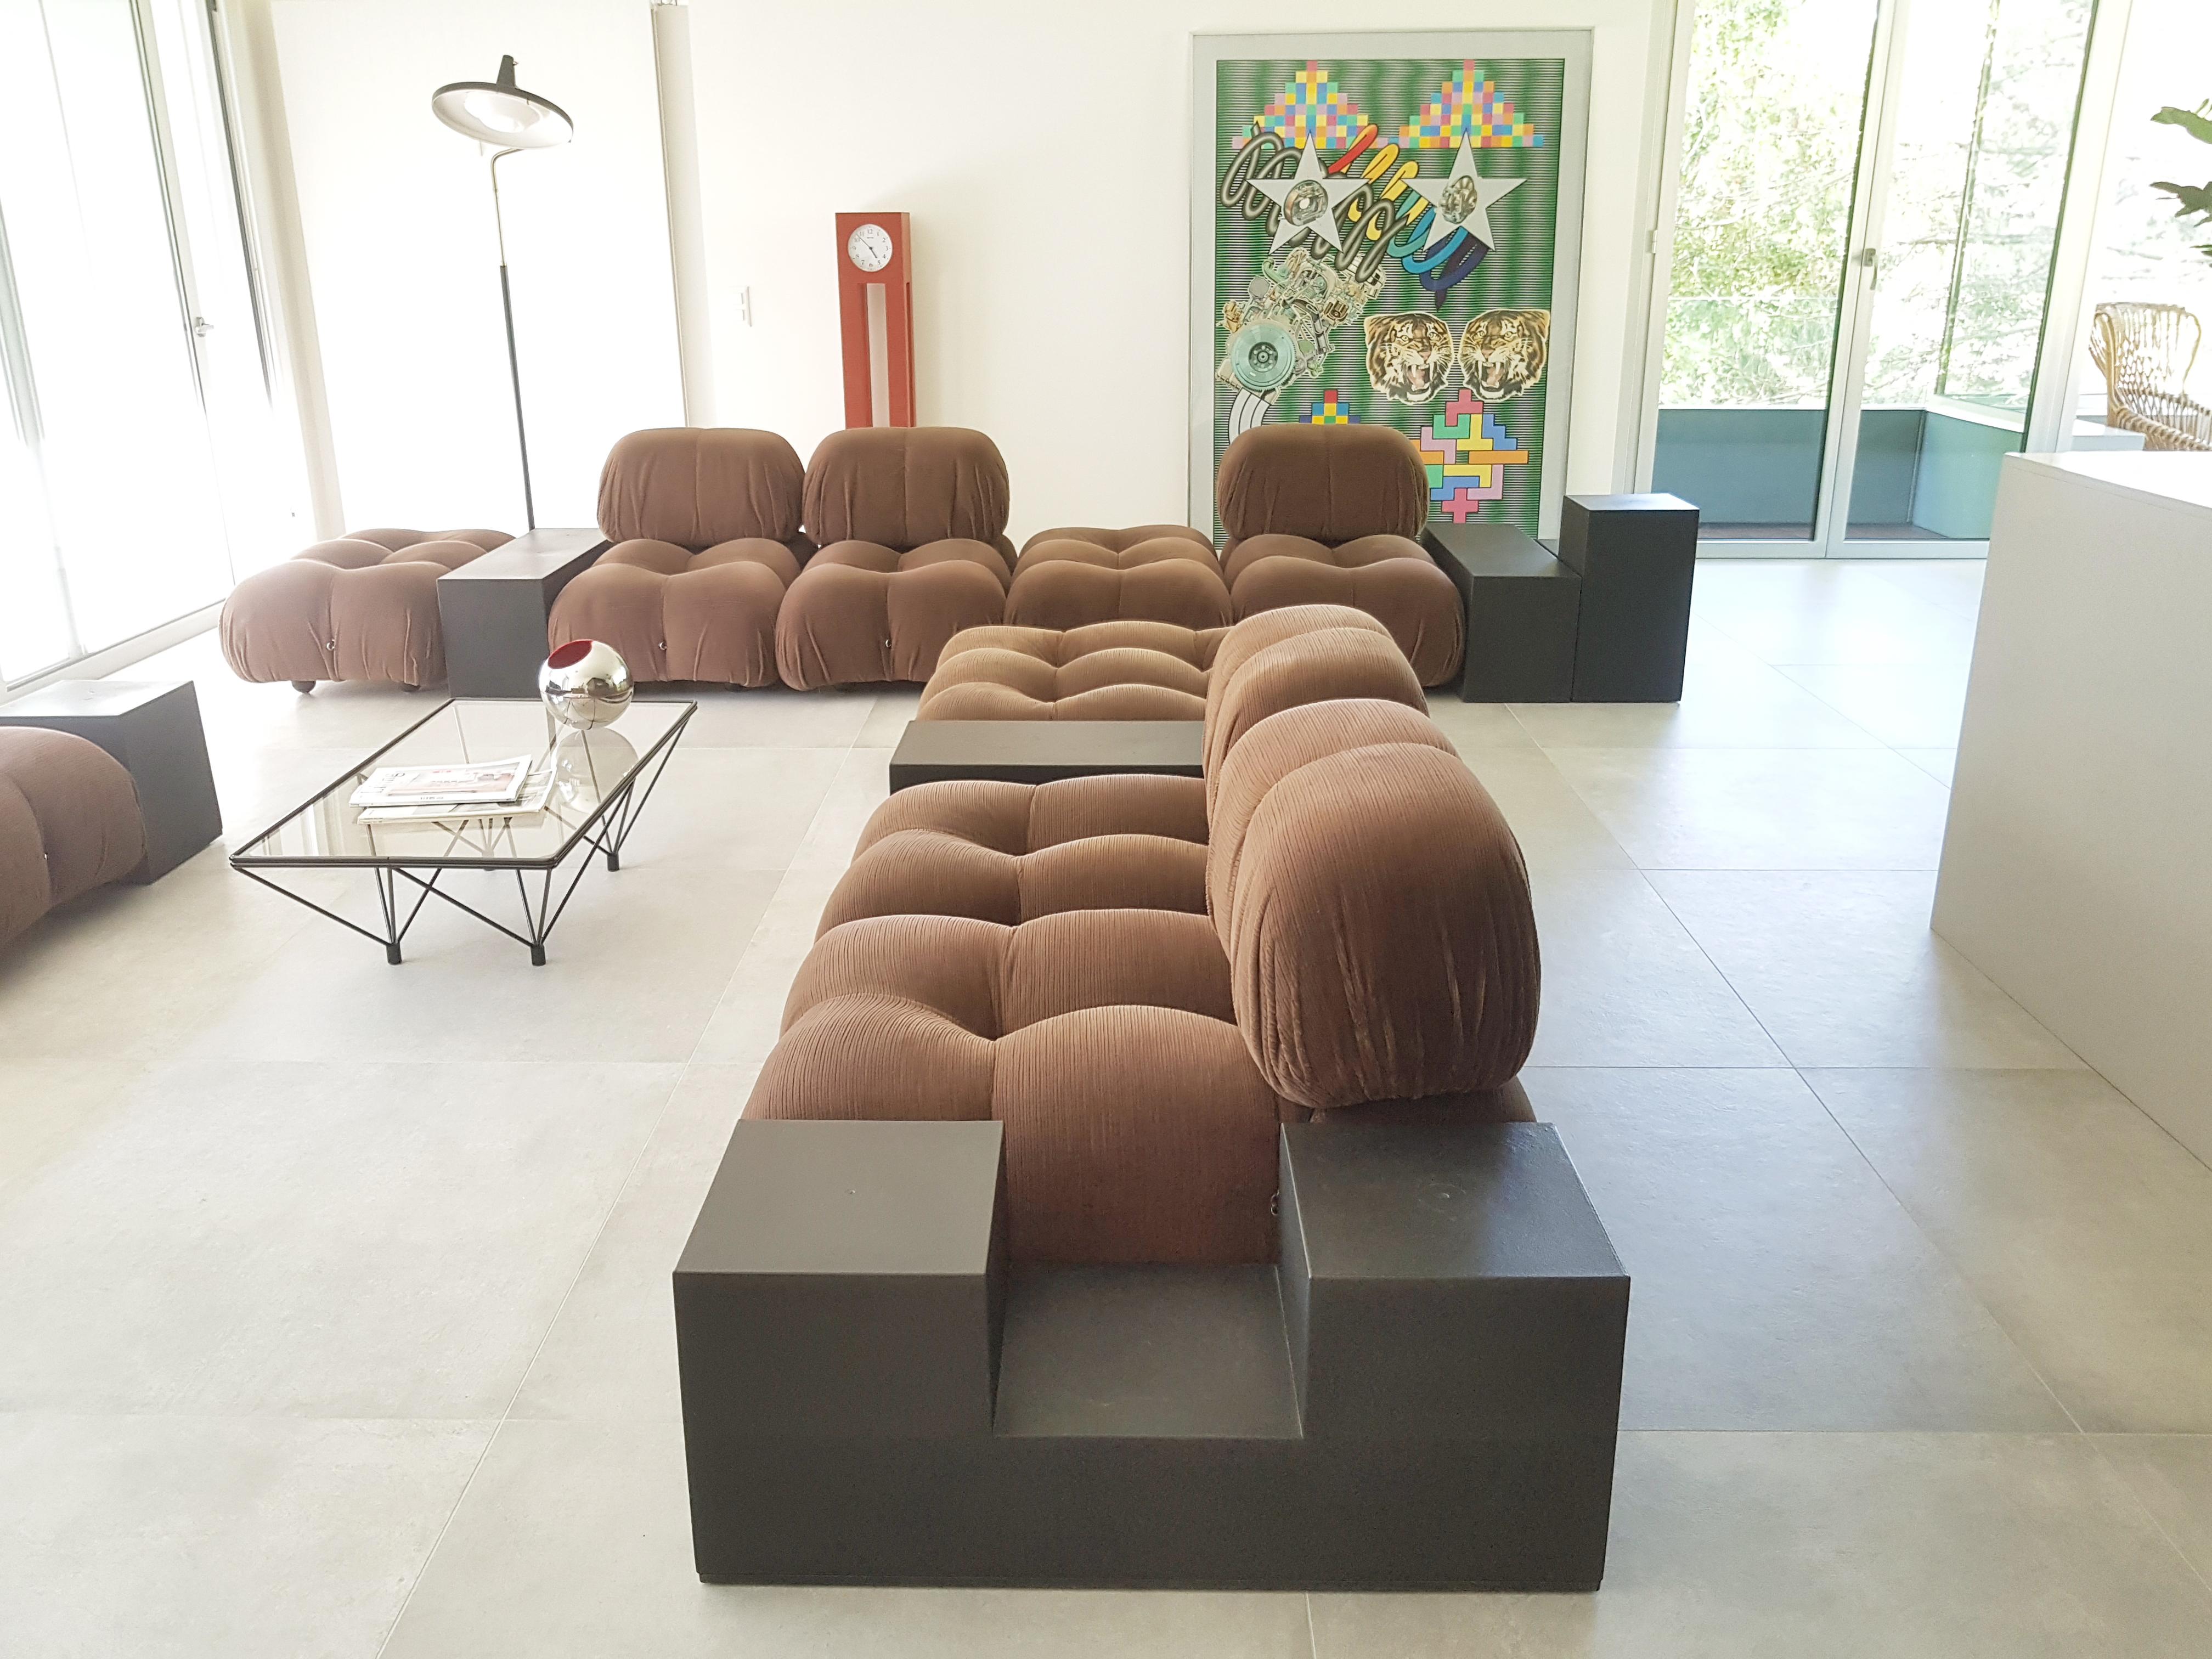 Set of 7 Camaleonda Sittings Designed by Mario Bellini for C&B Italia, 1970 For Sale 13